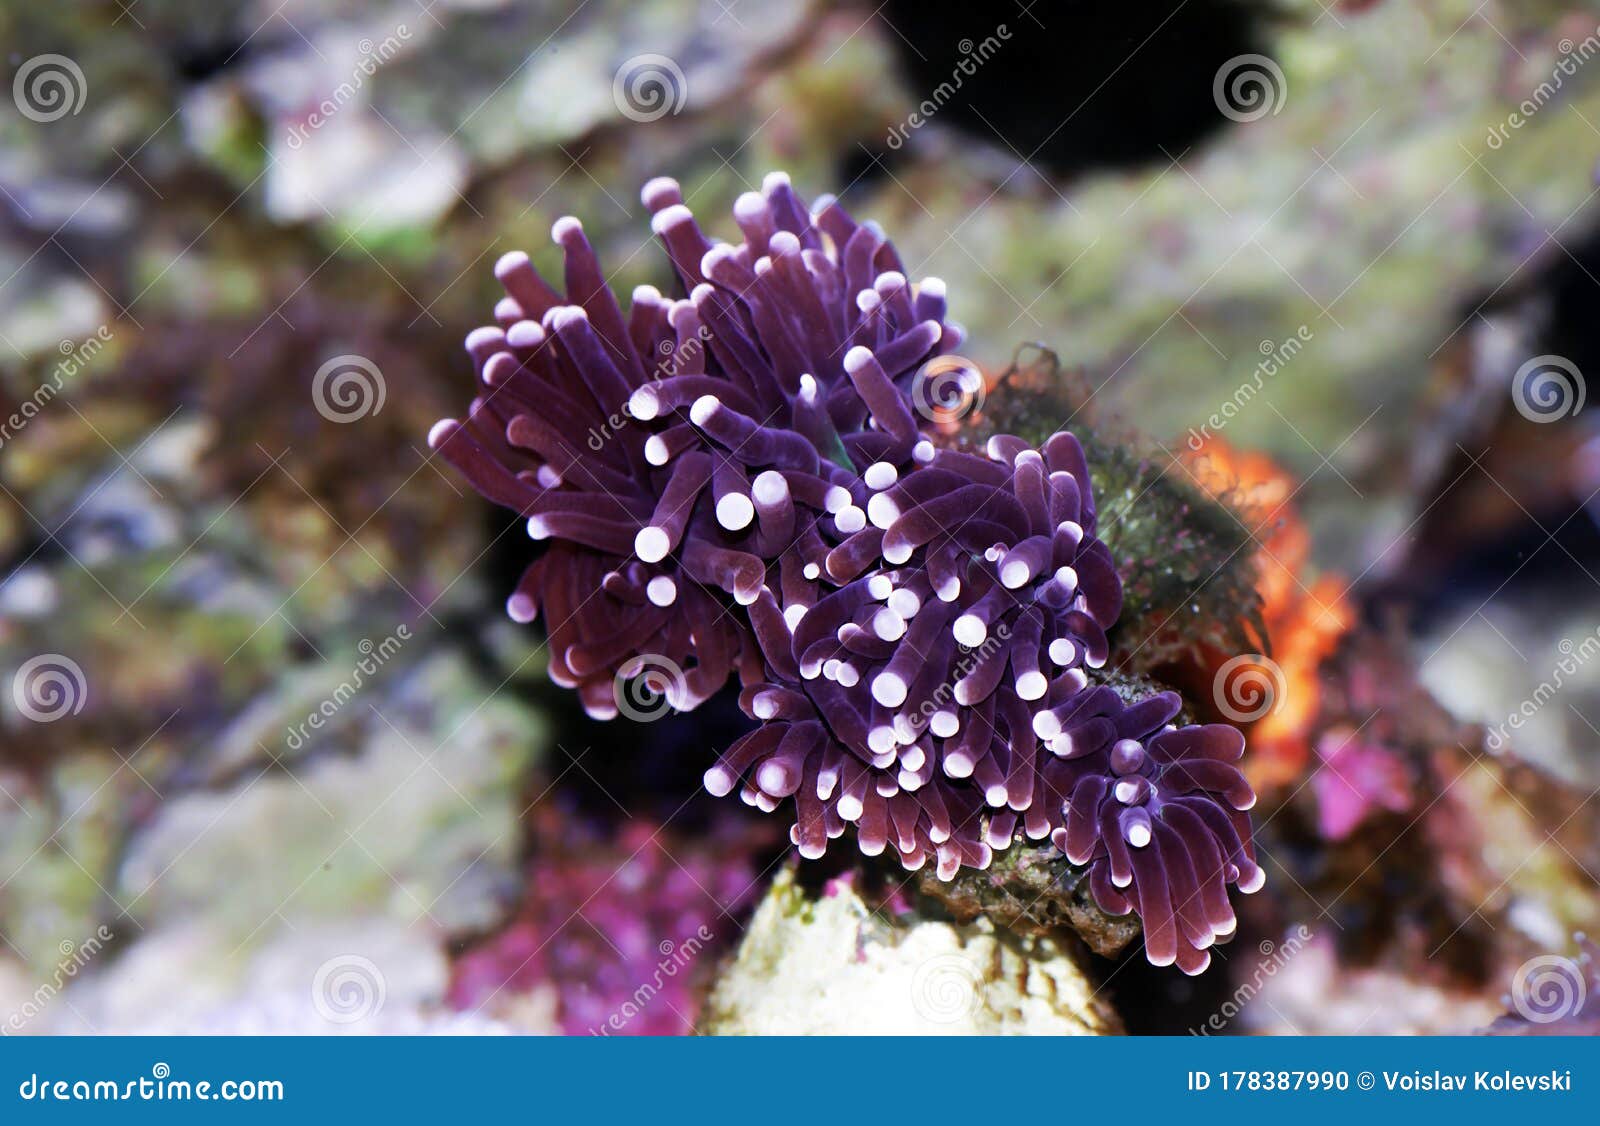 euphyllia torch lps coral - euphyllia glabrescens